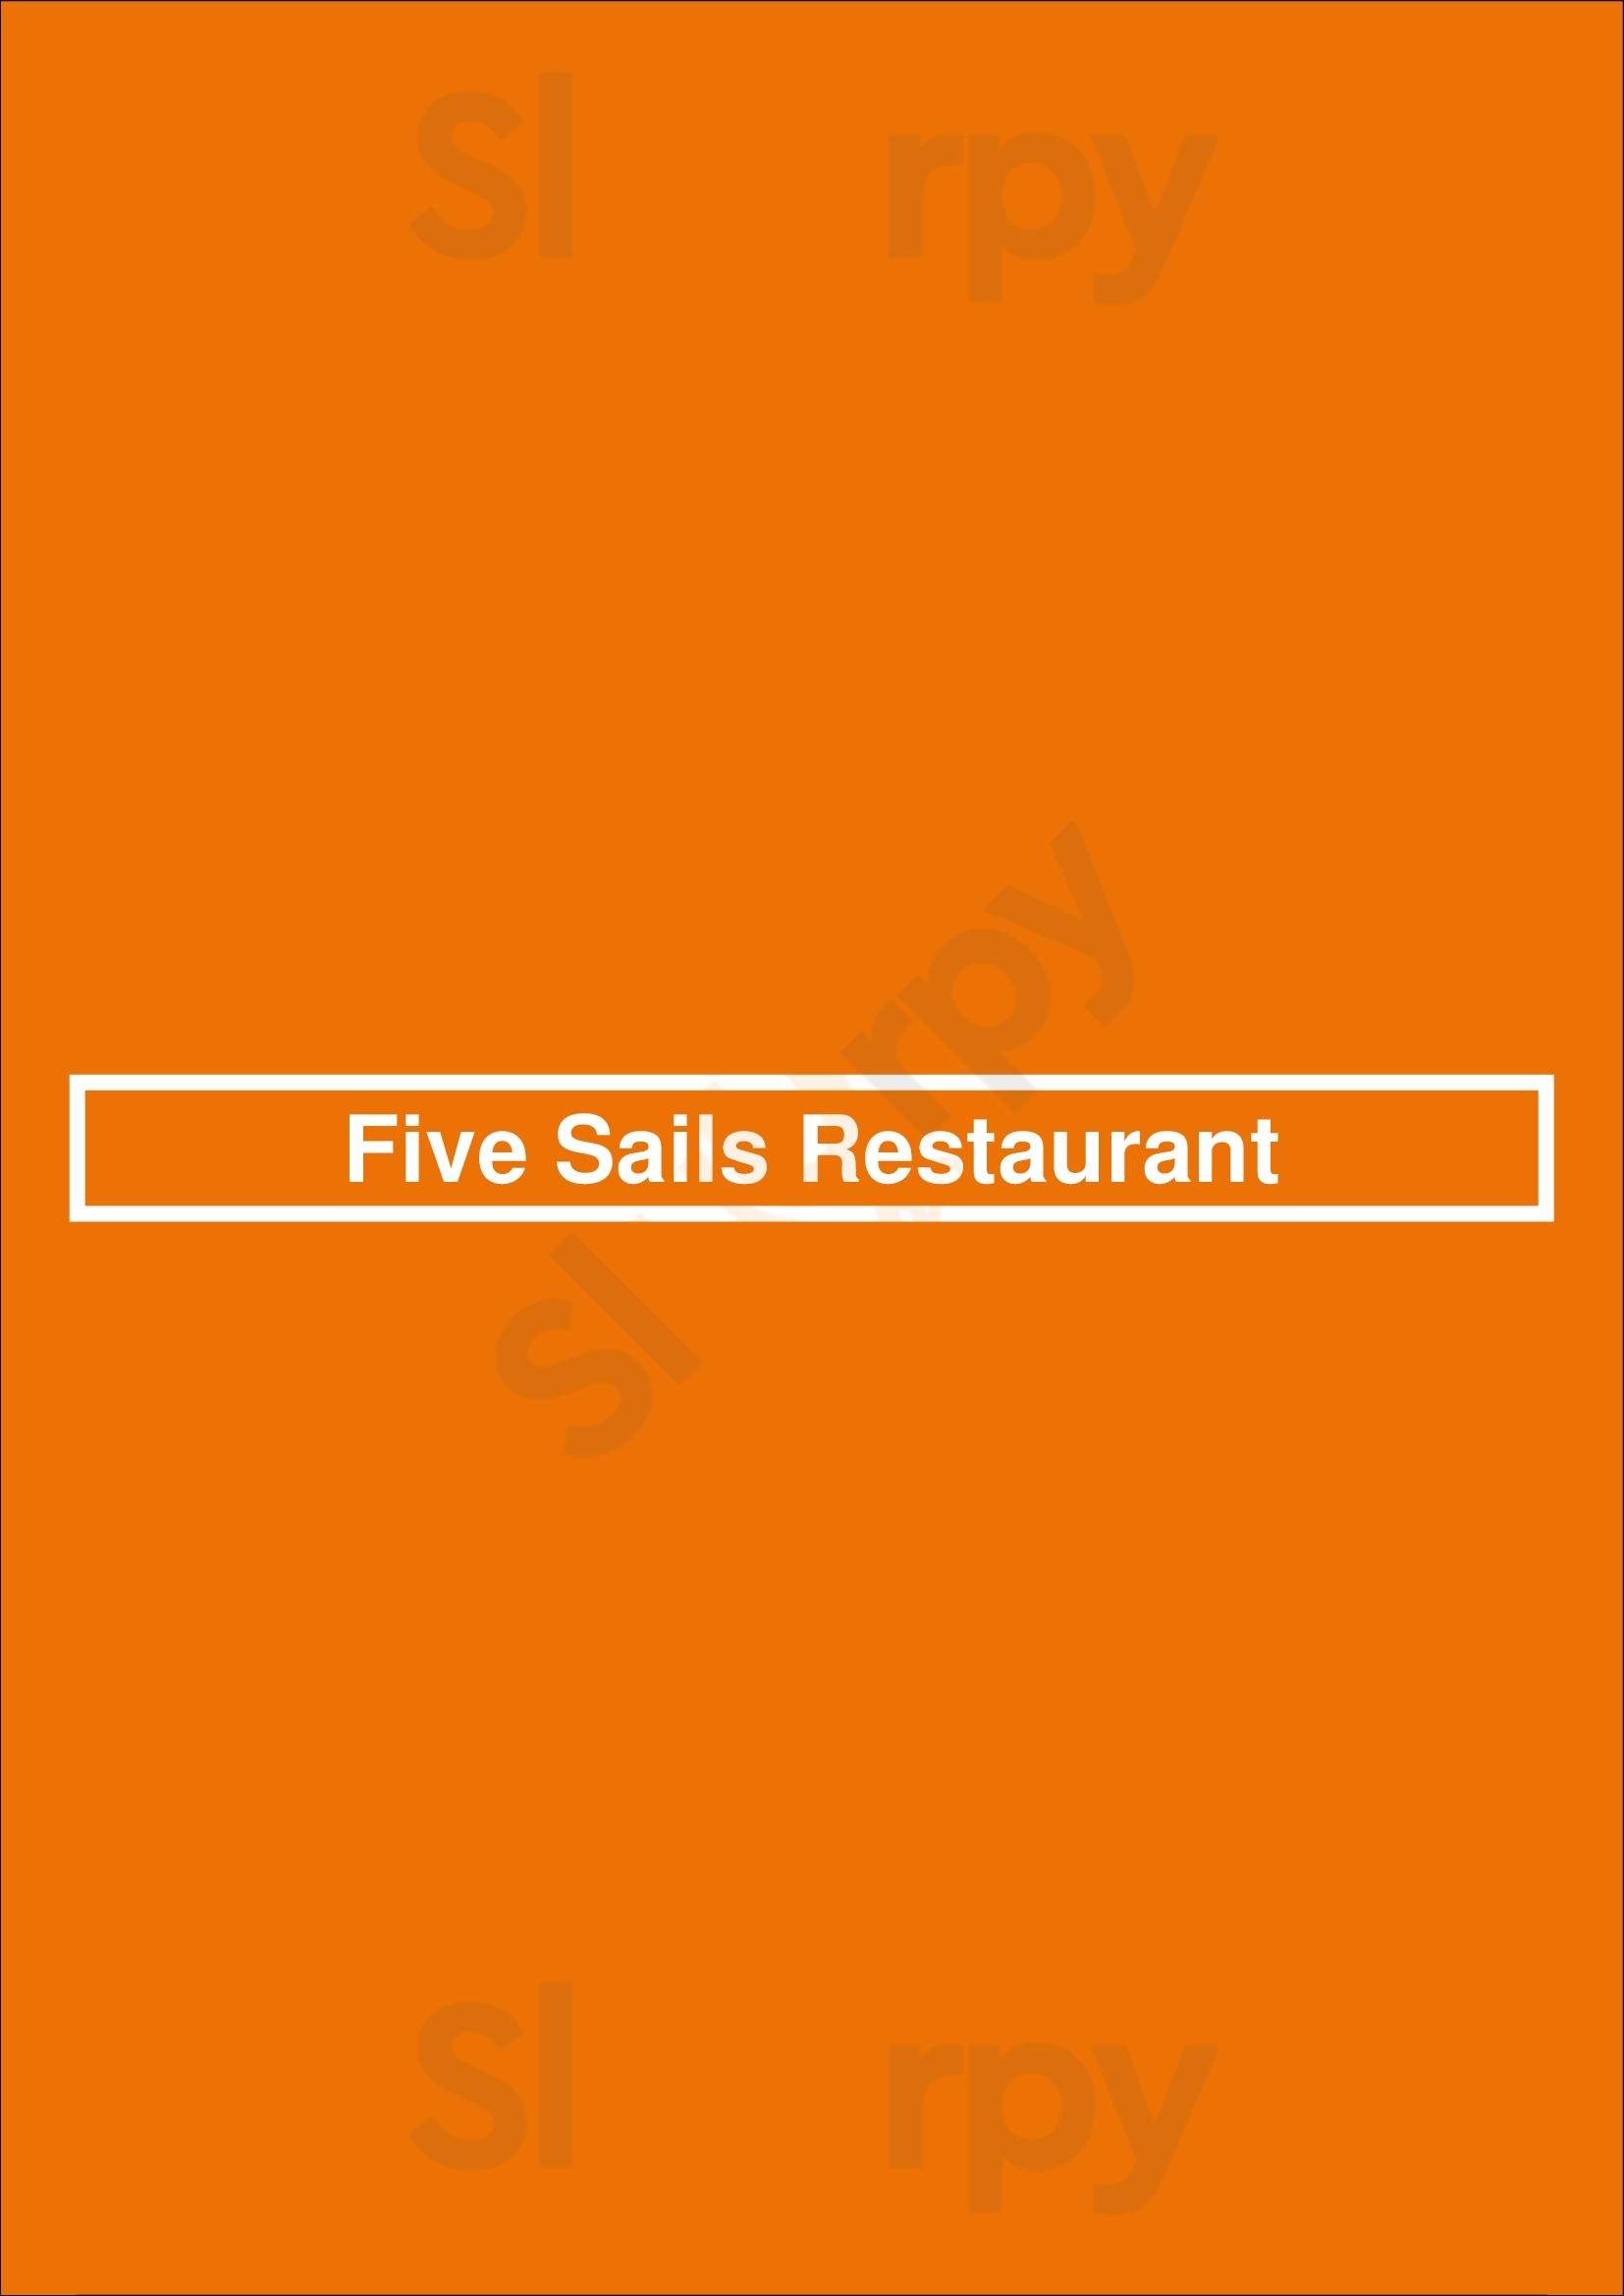 Five Sails Restaurant Vancouver Menu - 1